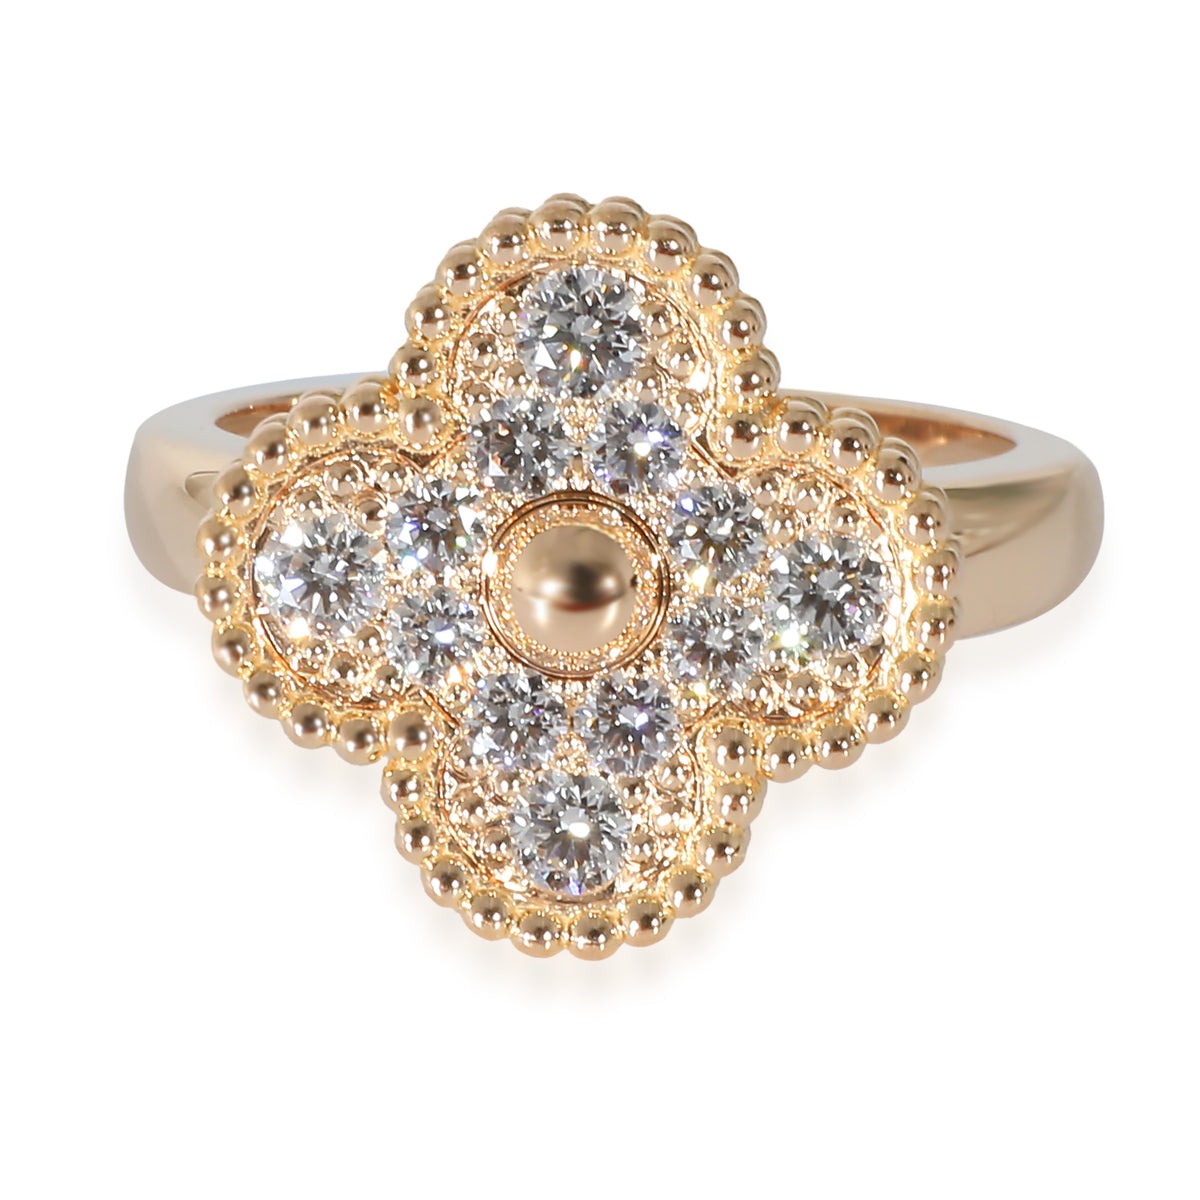 Alhambra Diamond Ring in 18k Rose Gold 0.48 CTW